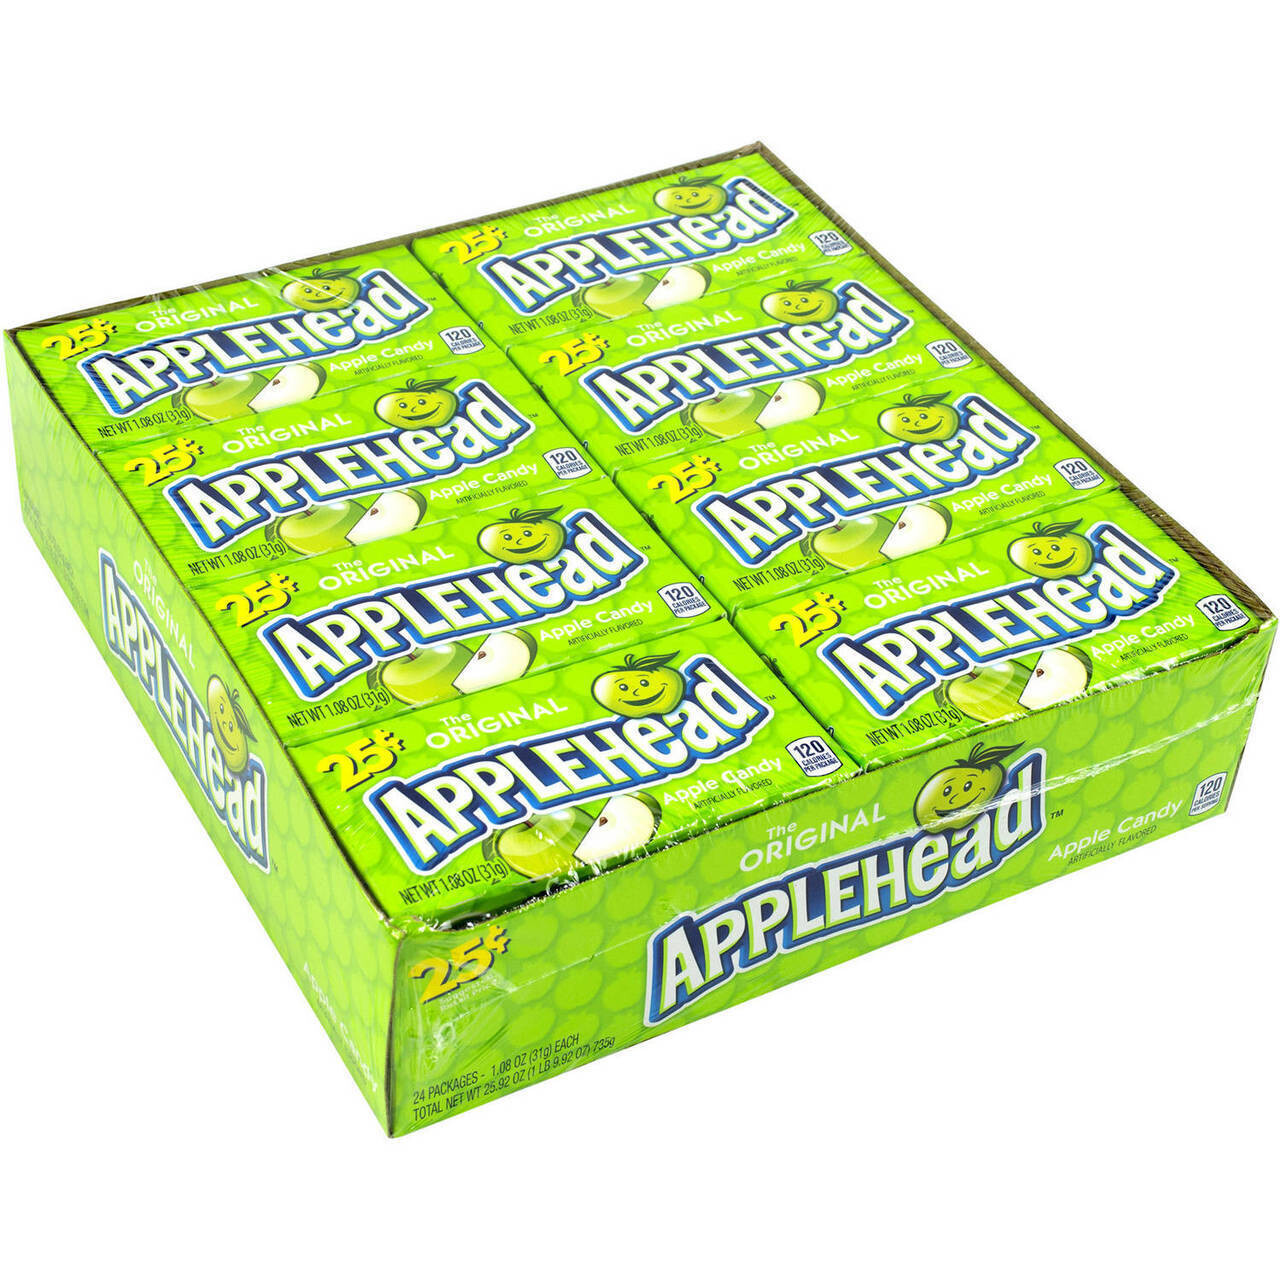 Lemonheads 24ct boxes Appleheads